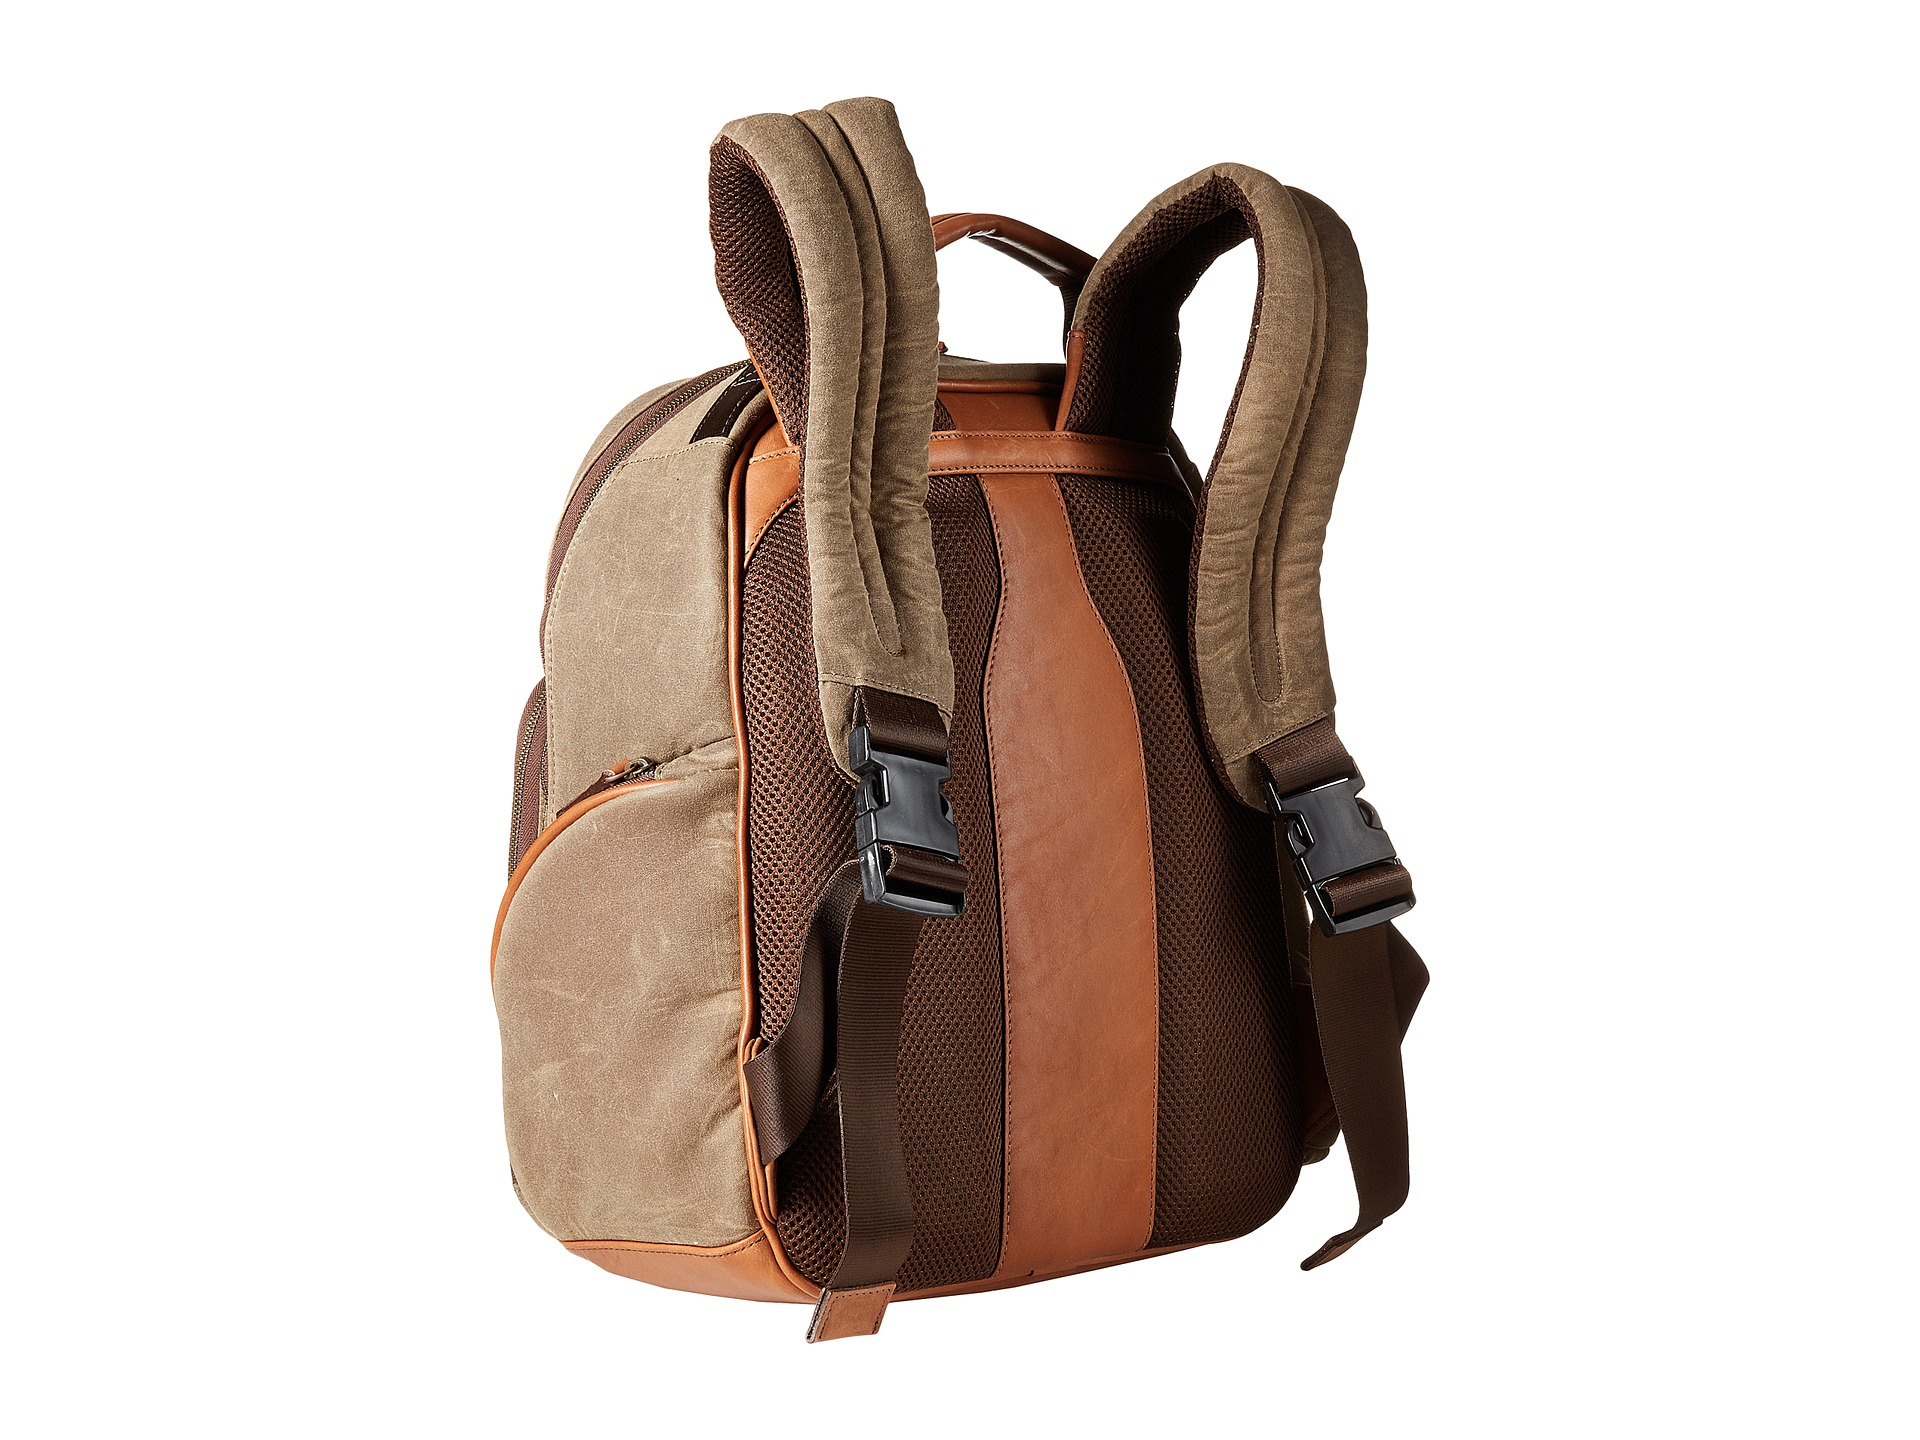 Lyst - Allen Edmonds Canvas/leather Backpack in Brown for Men